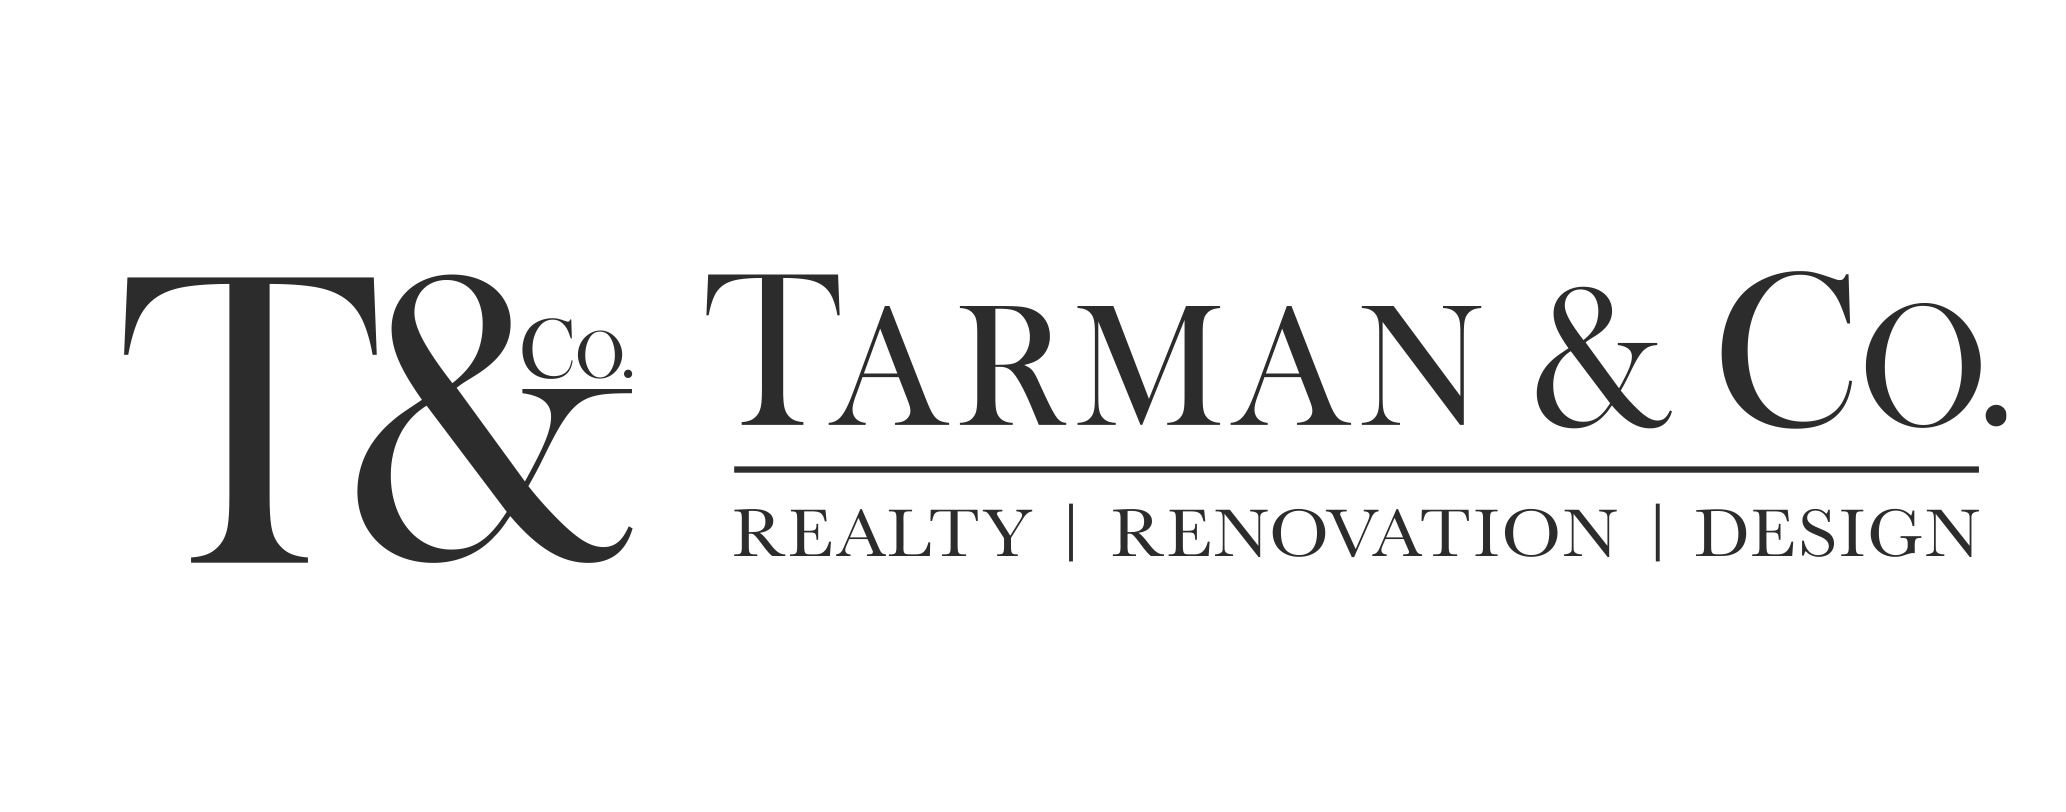 Tarman & Co.